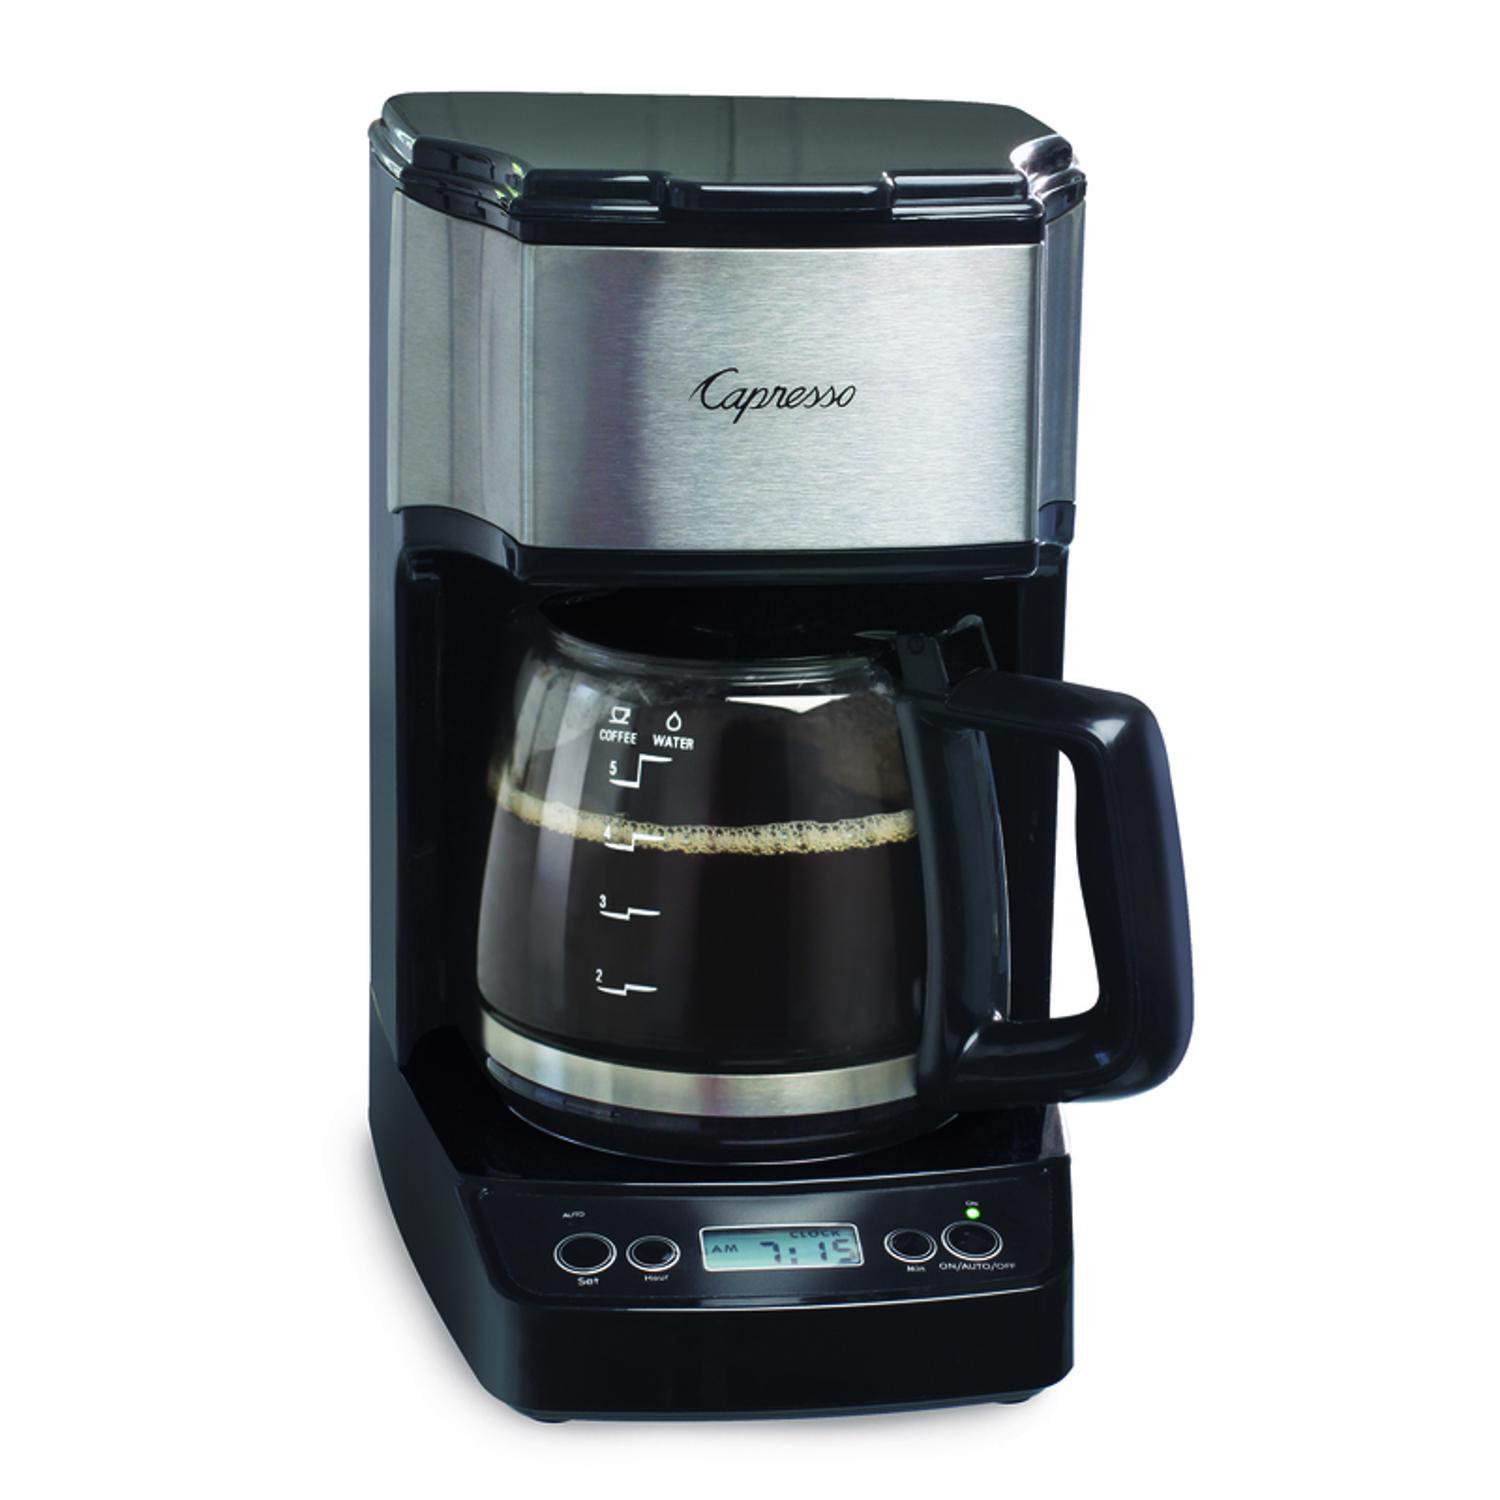 Capresso 5-Cup Mini Drip Coffee Maker & Reviews